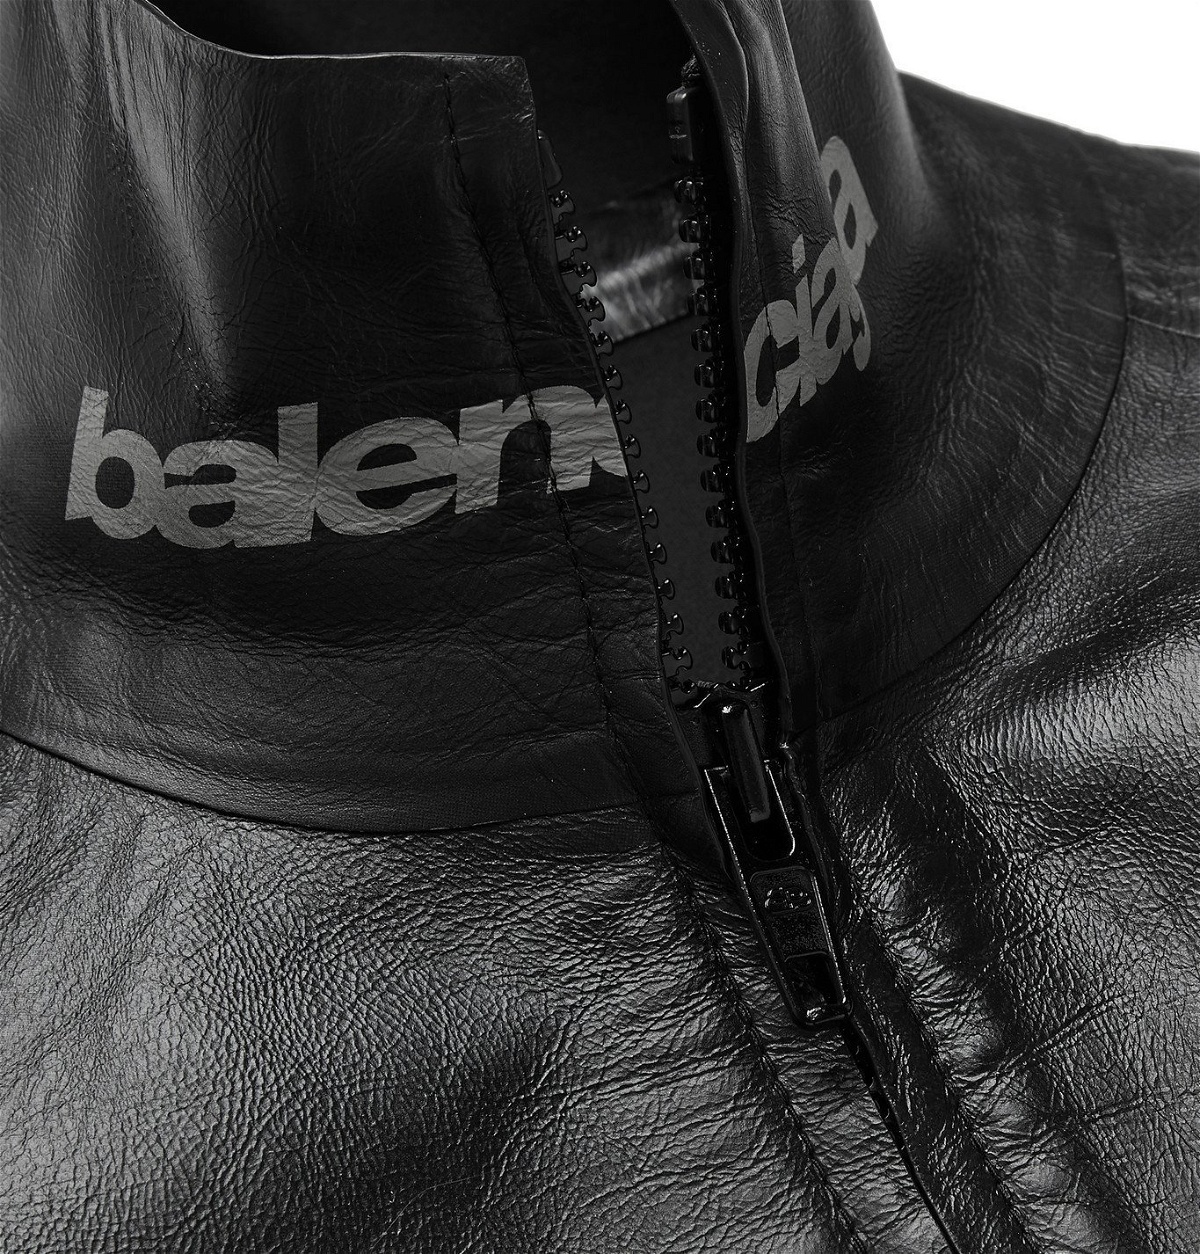 Balenciaga BB-monogram Leather Shirt Jacket - Black